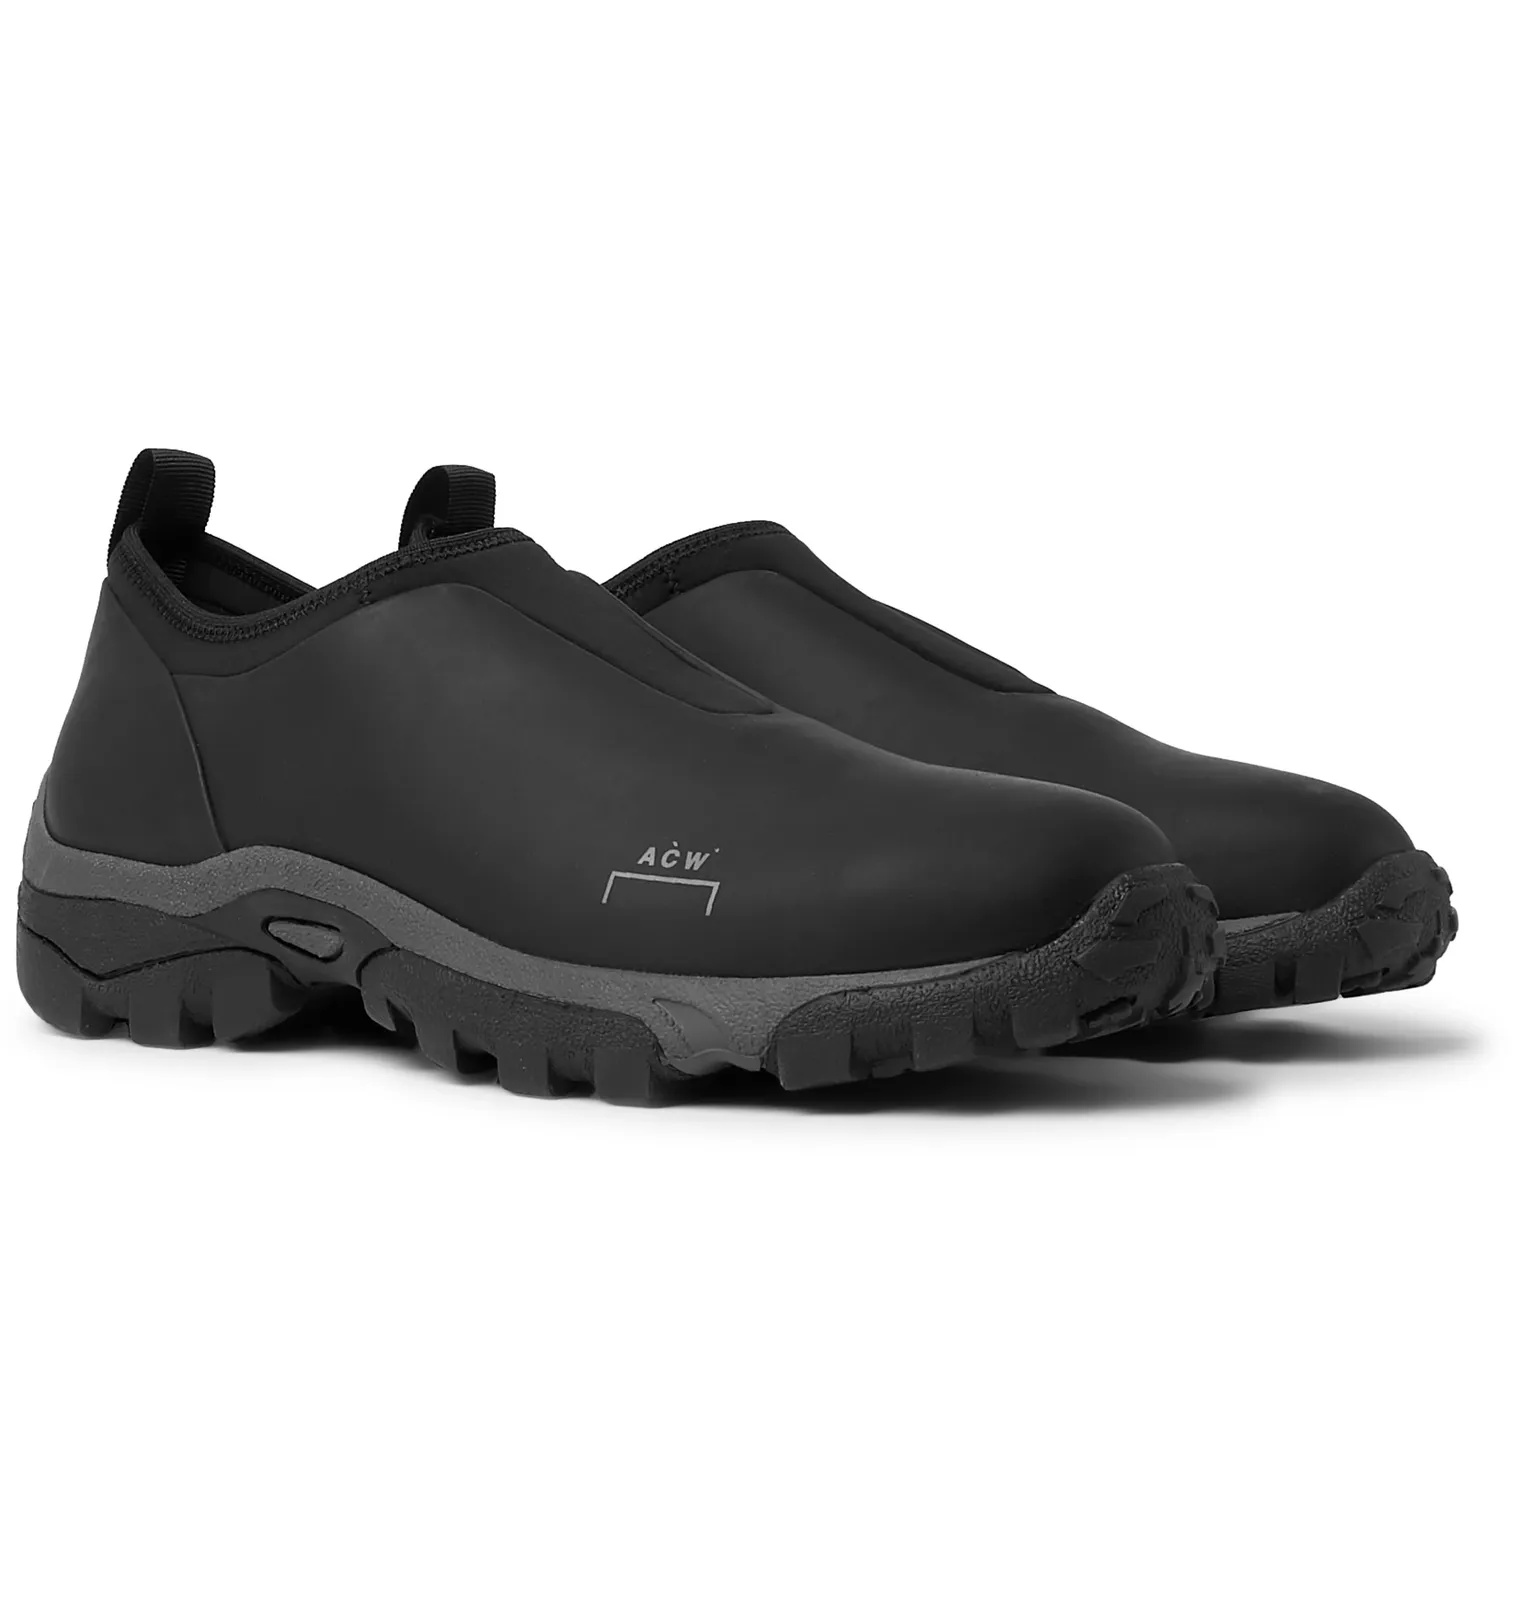 Dirt Mock Leather and Neoprene Slip-On Sneakers - 2